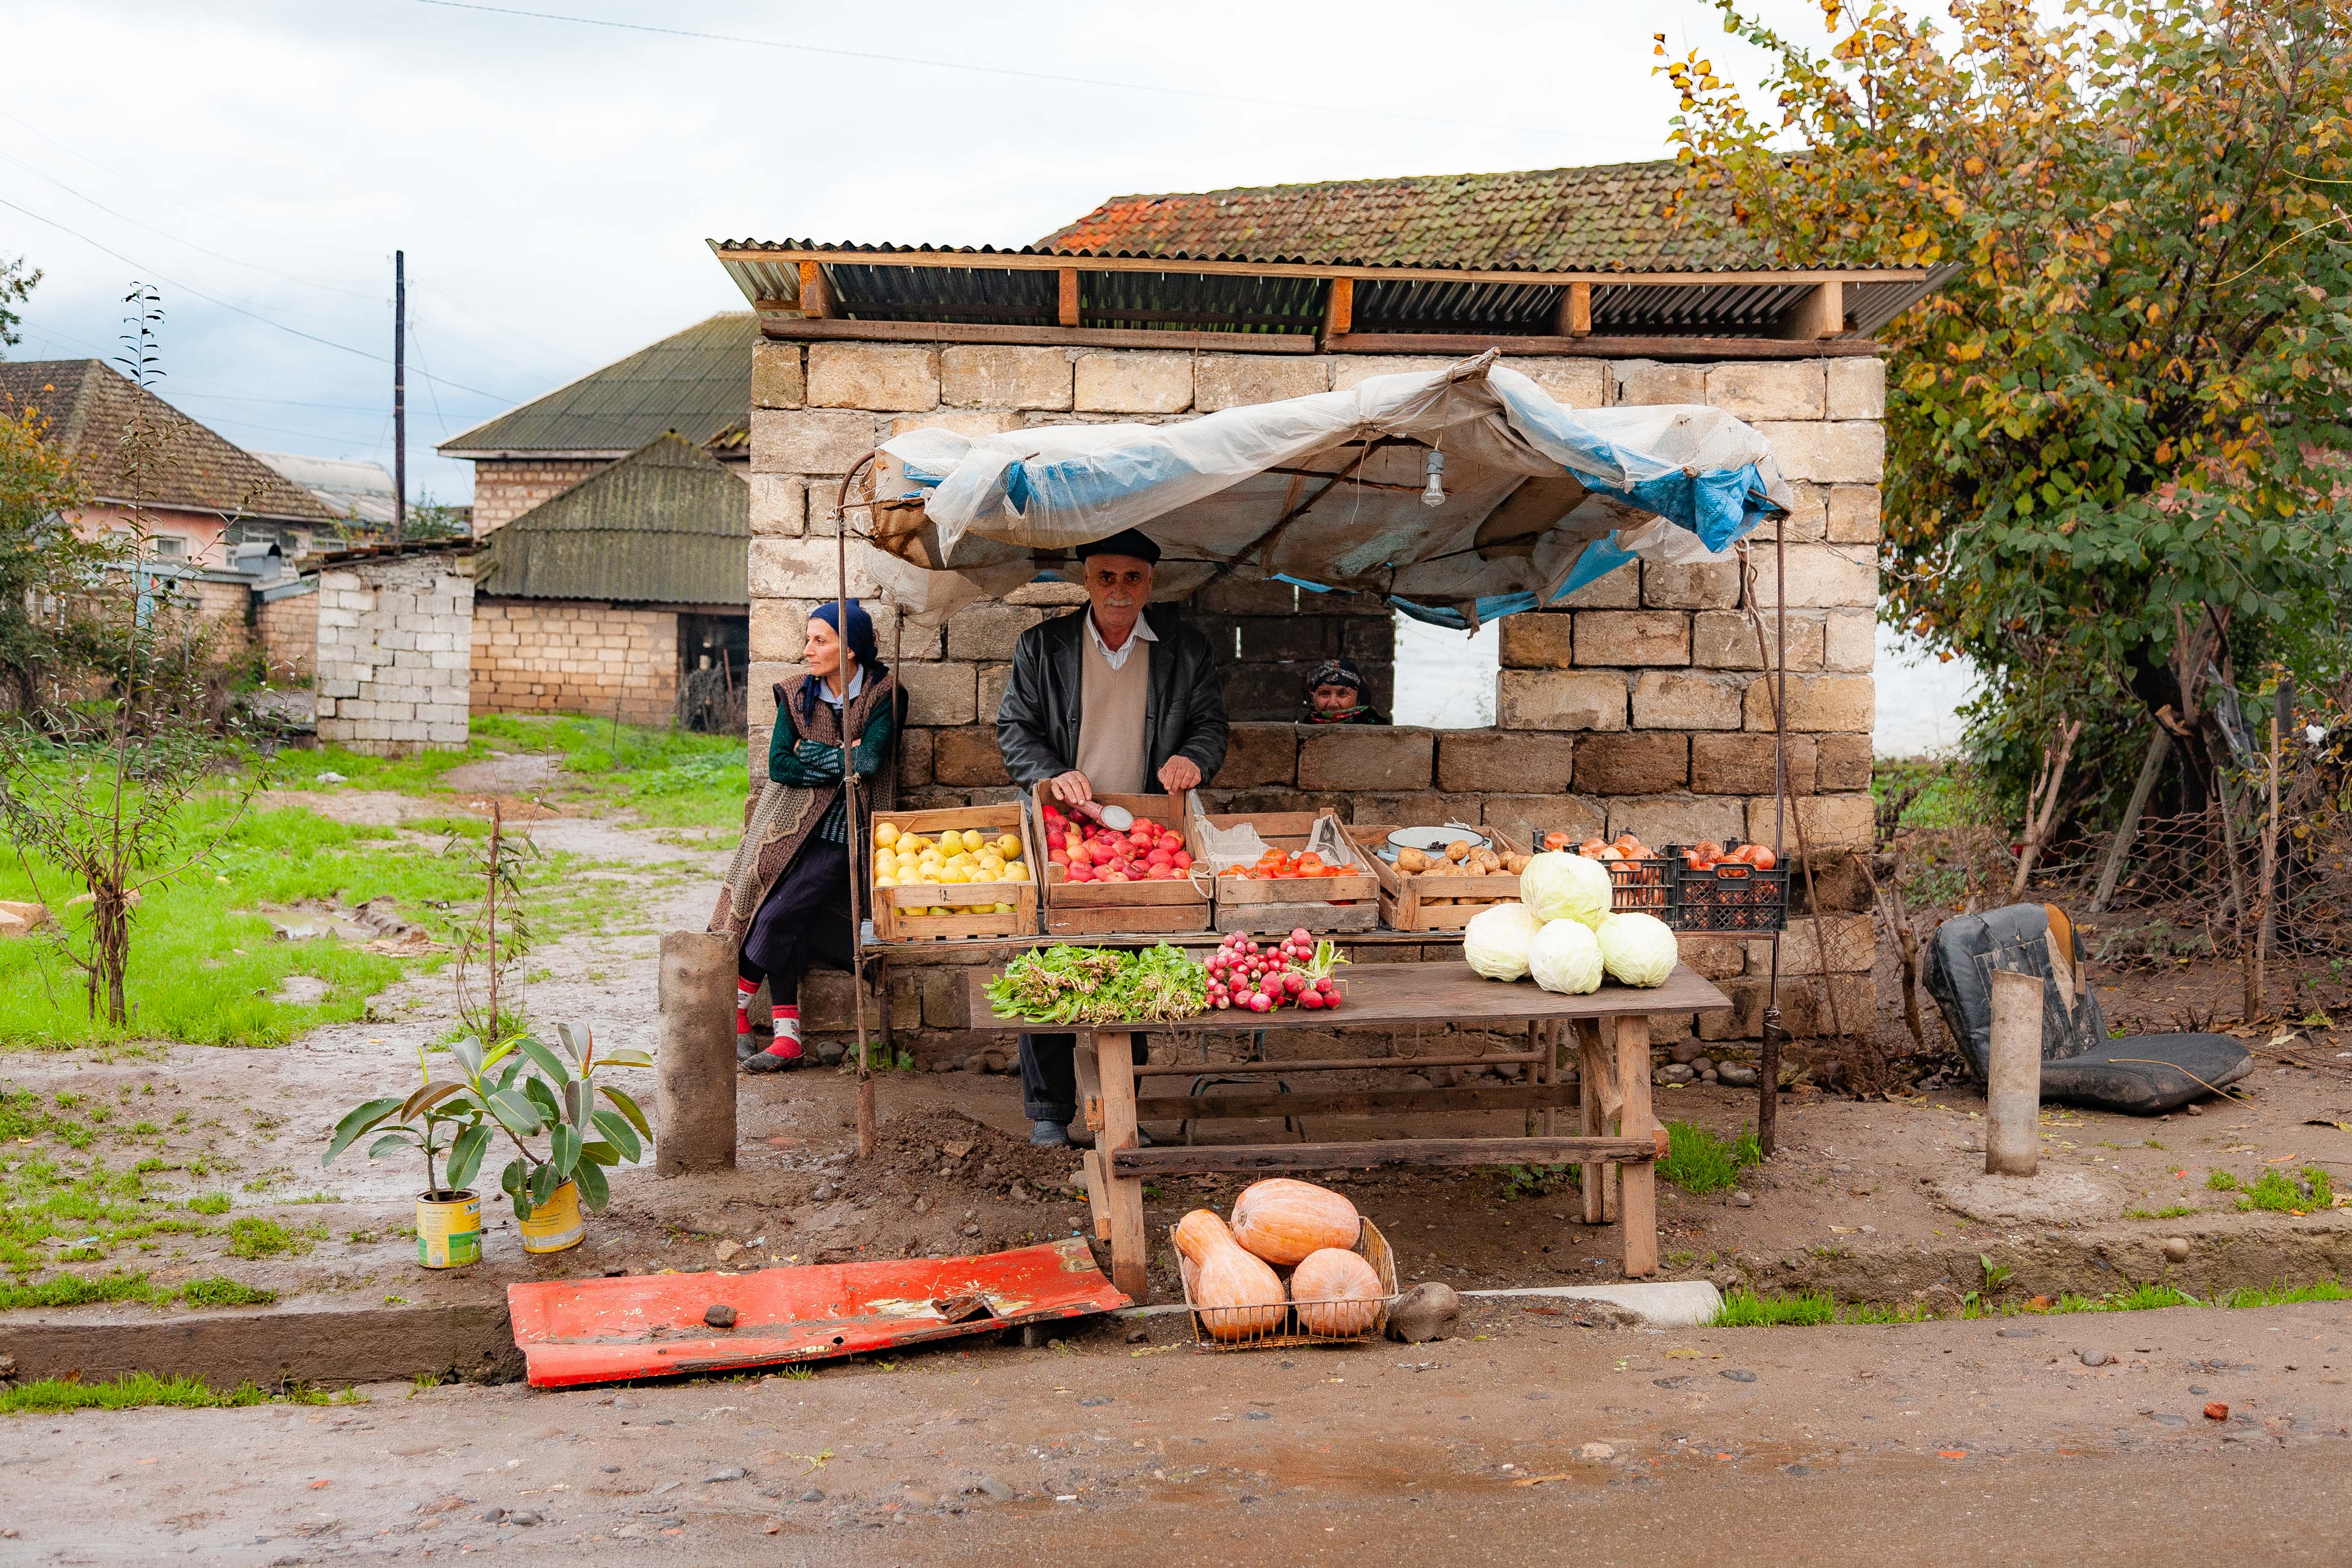 Azerbaijan, Masalli Prov, Fruit Stand, 2009, IMG 9683